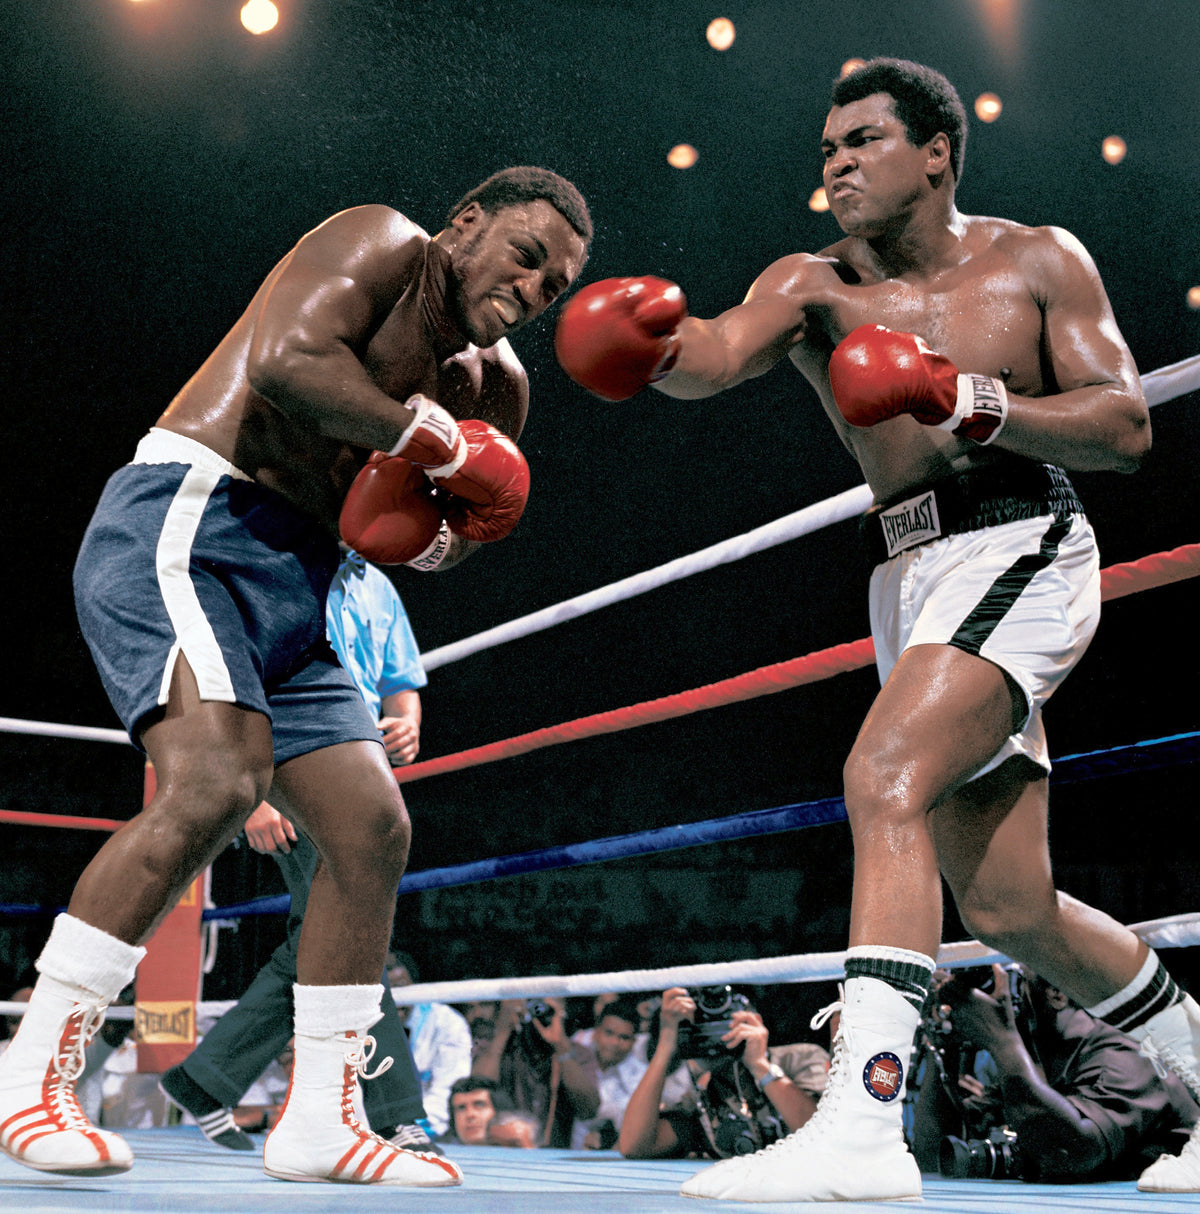 Muhammad Ali vs Joe Frazier III (Thrilla in Manila)